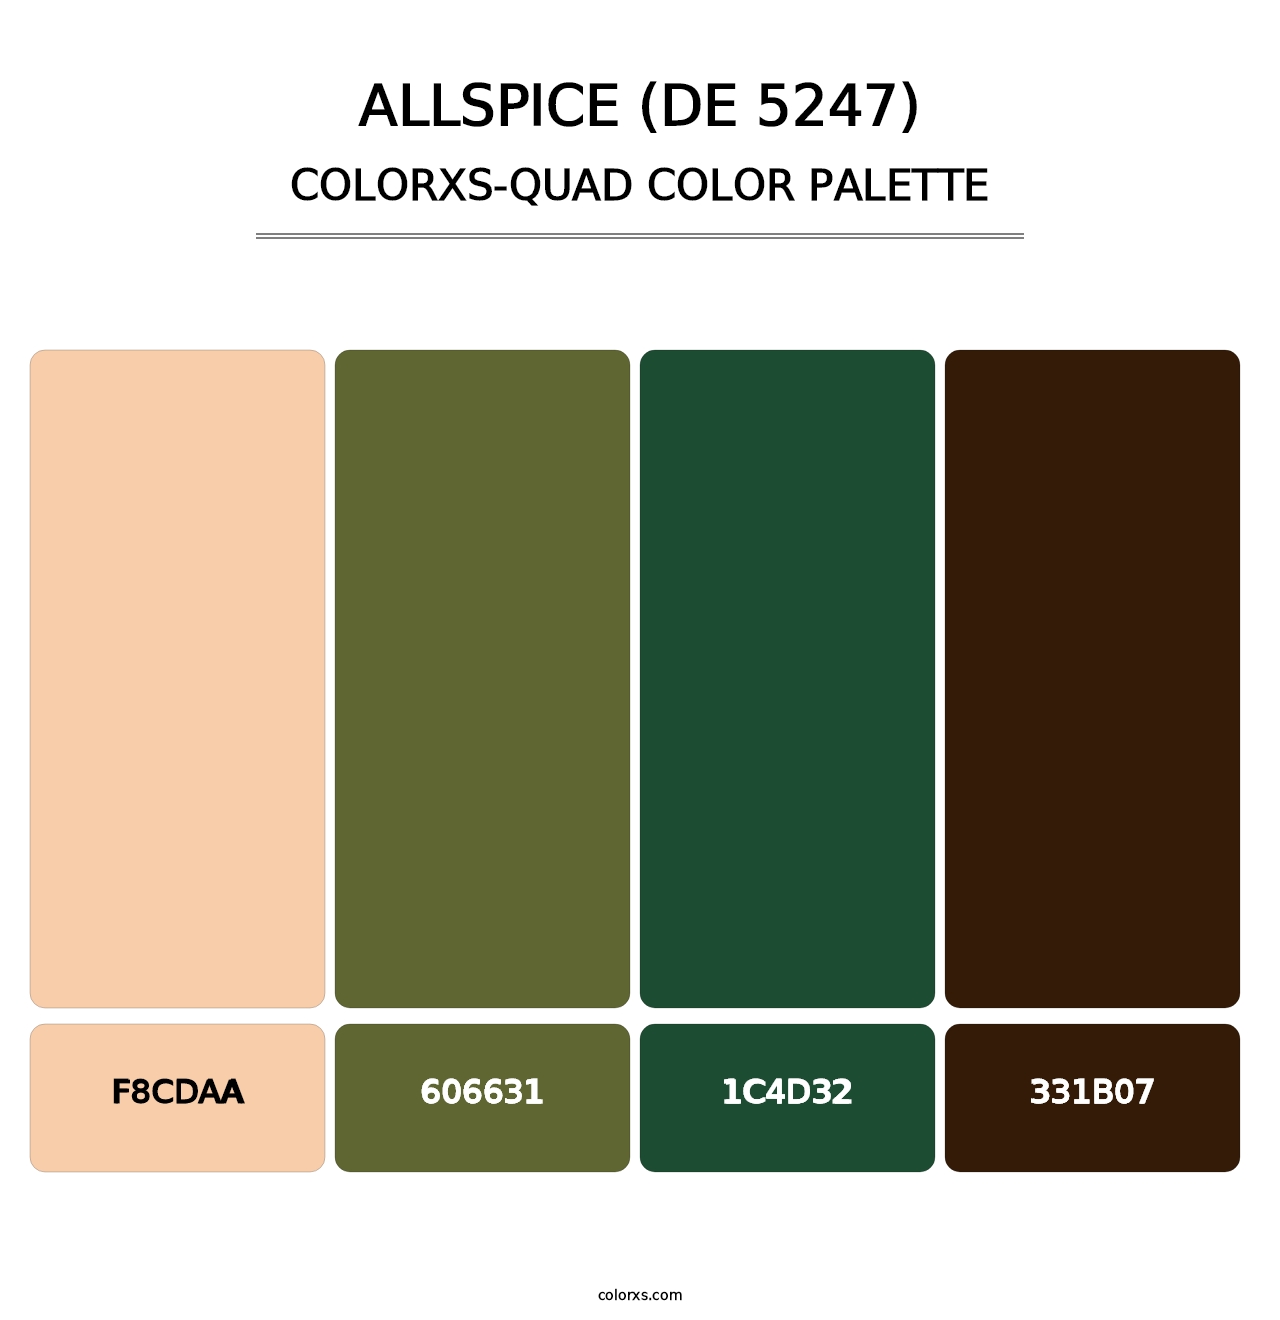 Allspice (DE 5247) - Colorxs Quad Palette